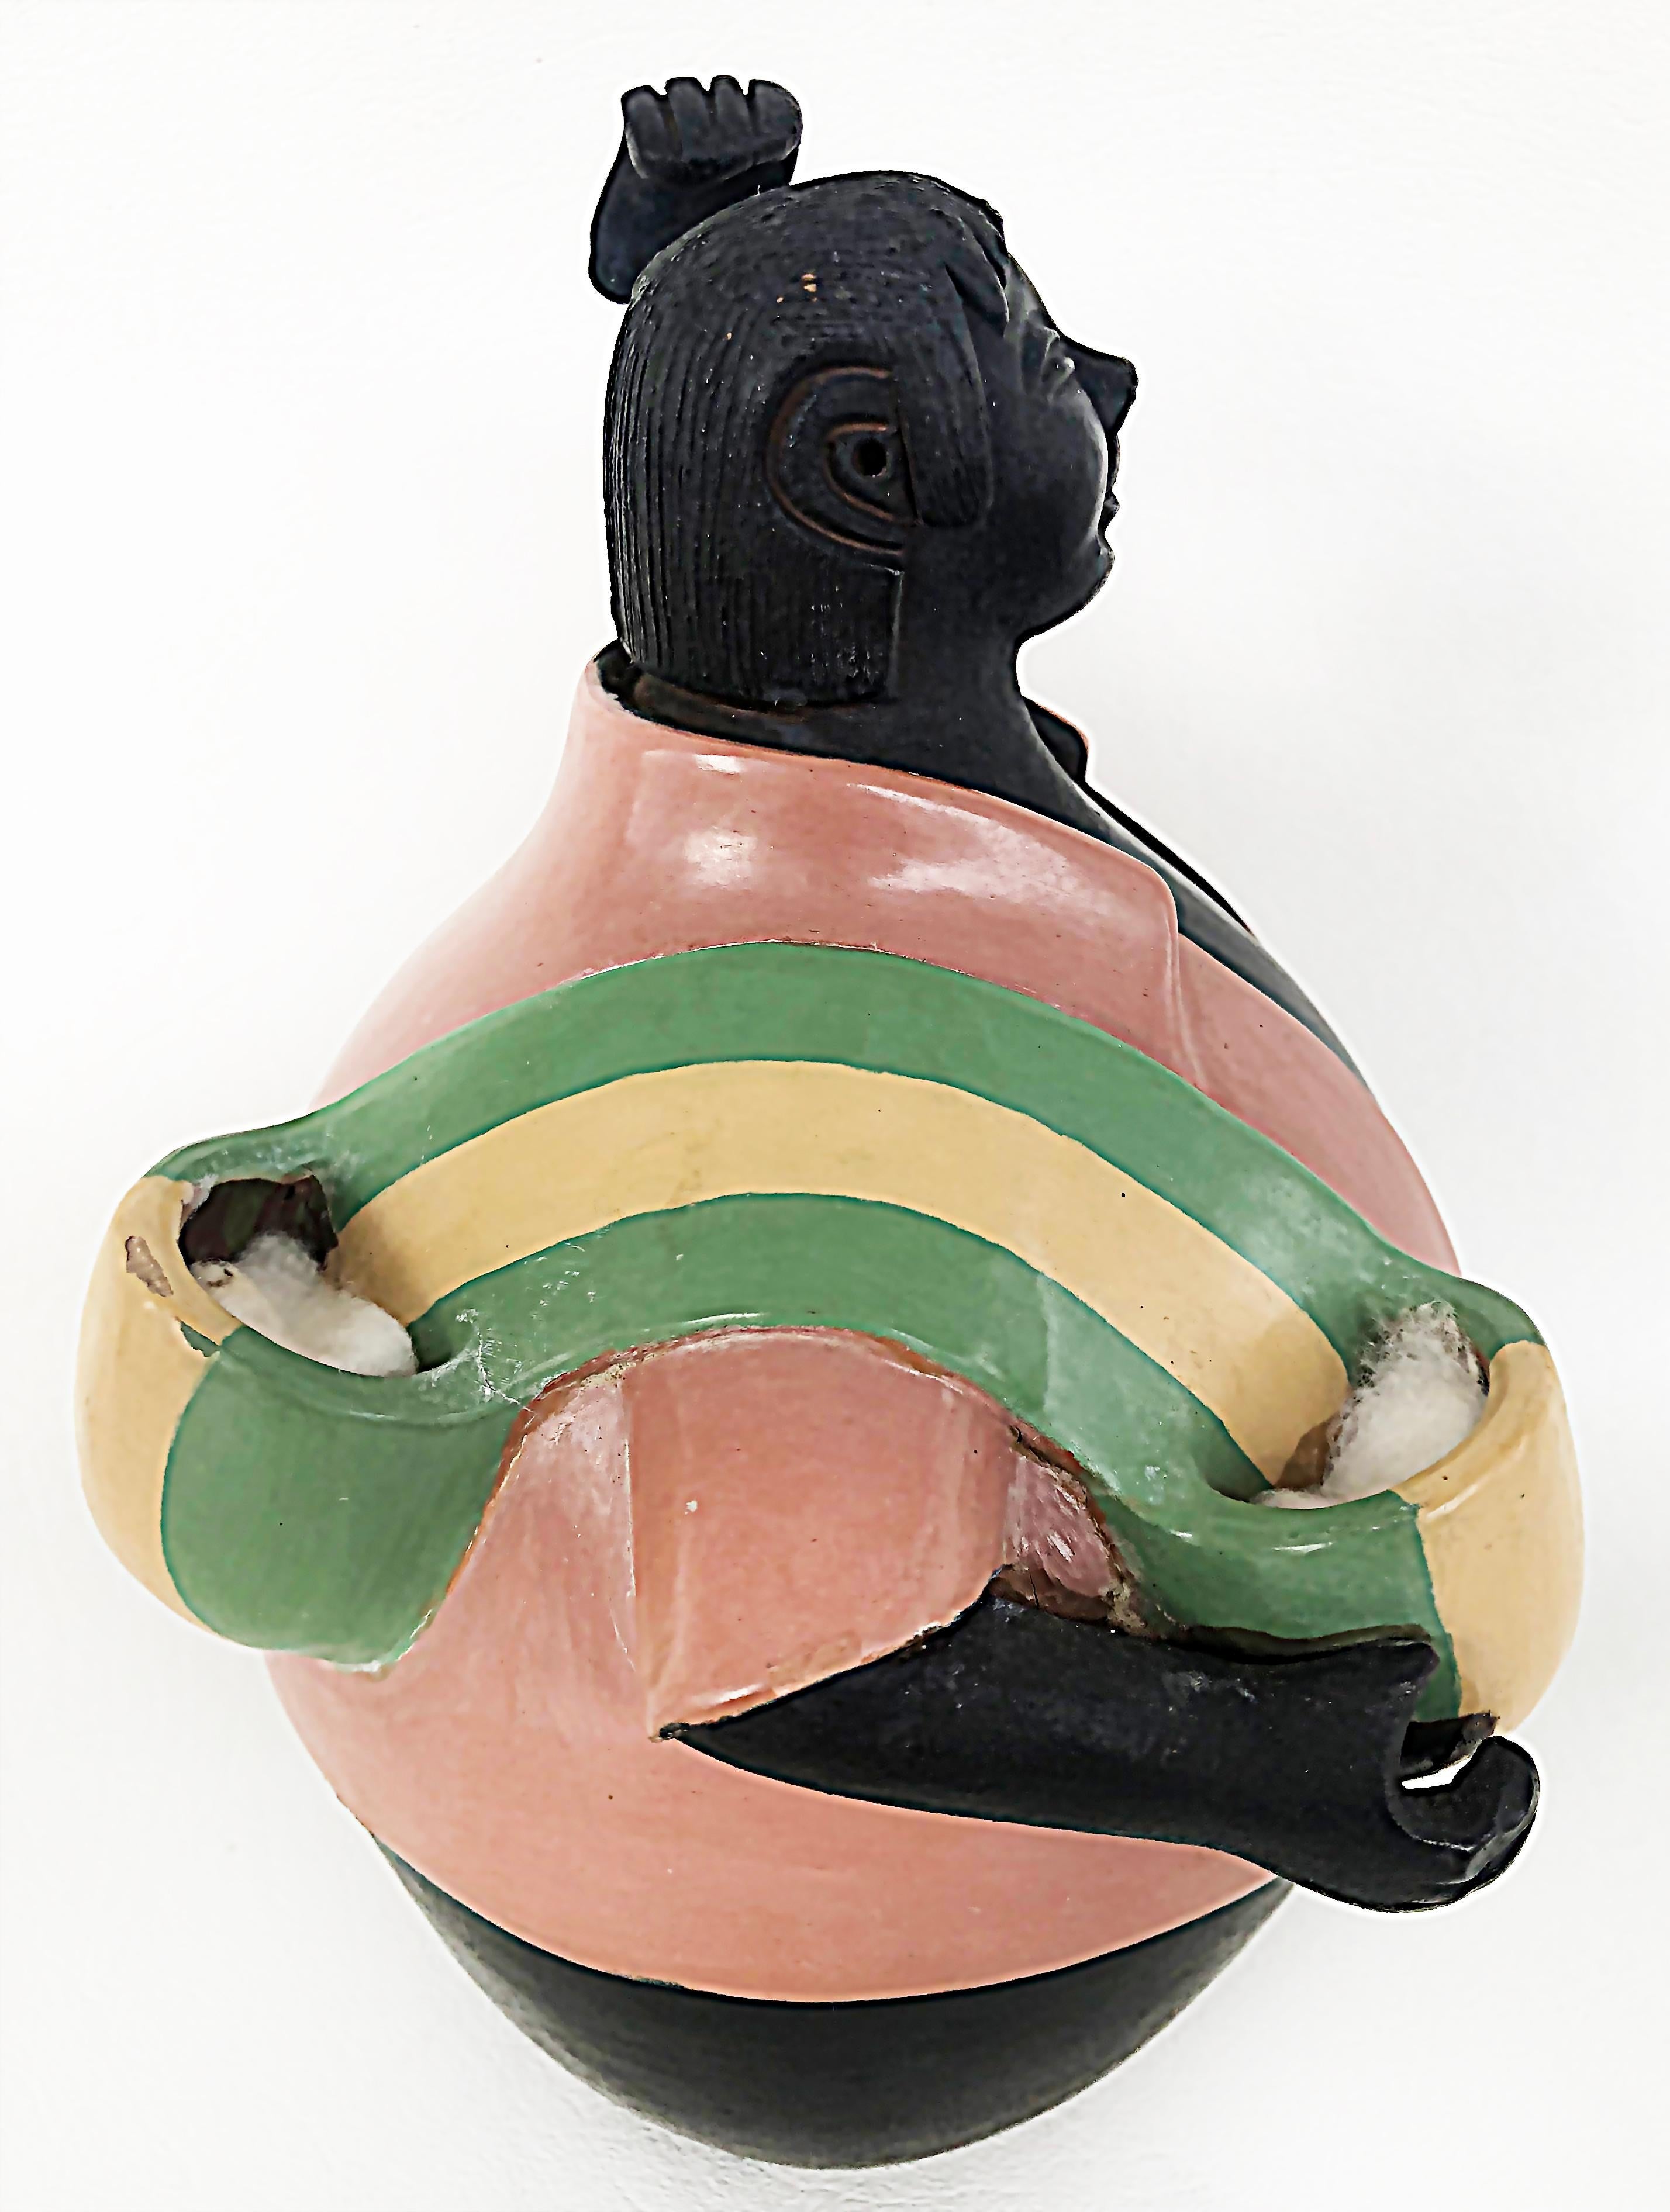 Manuel Sandoval Valez Latin American Figurative Ceramic Sculpture of a Newsboy In Good Condition For Sale In Miami, FL